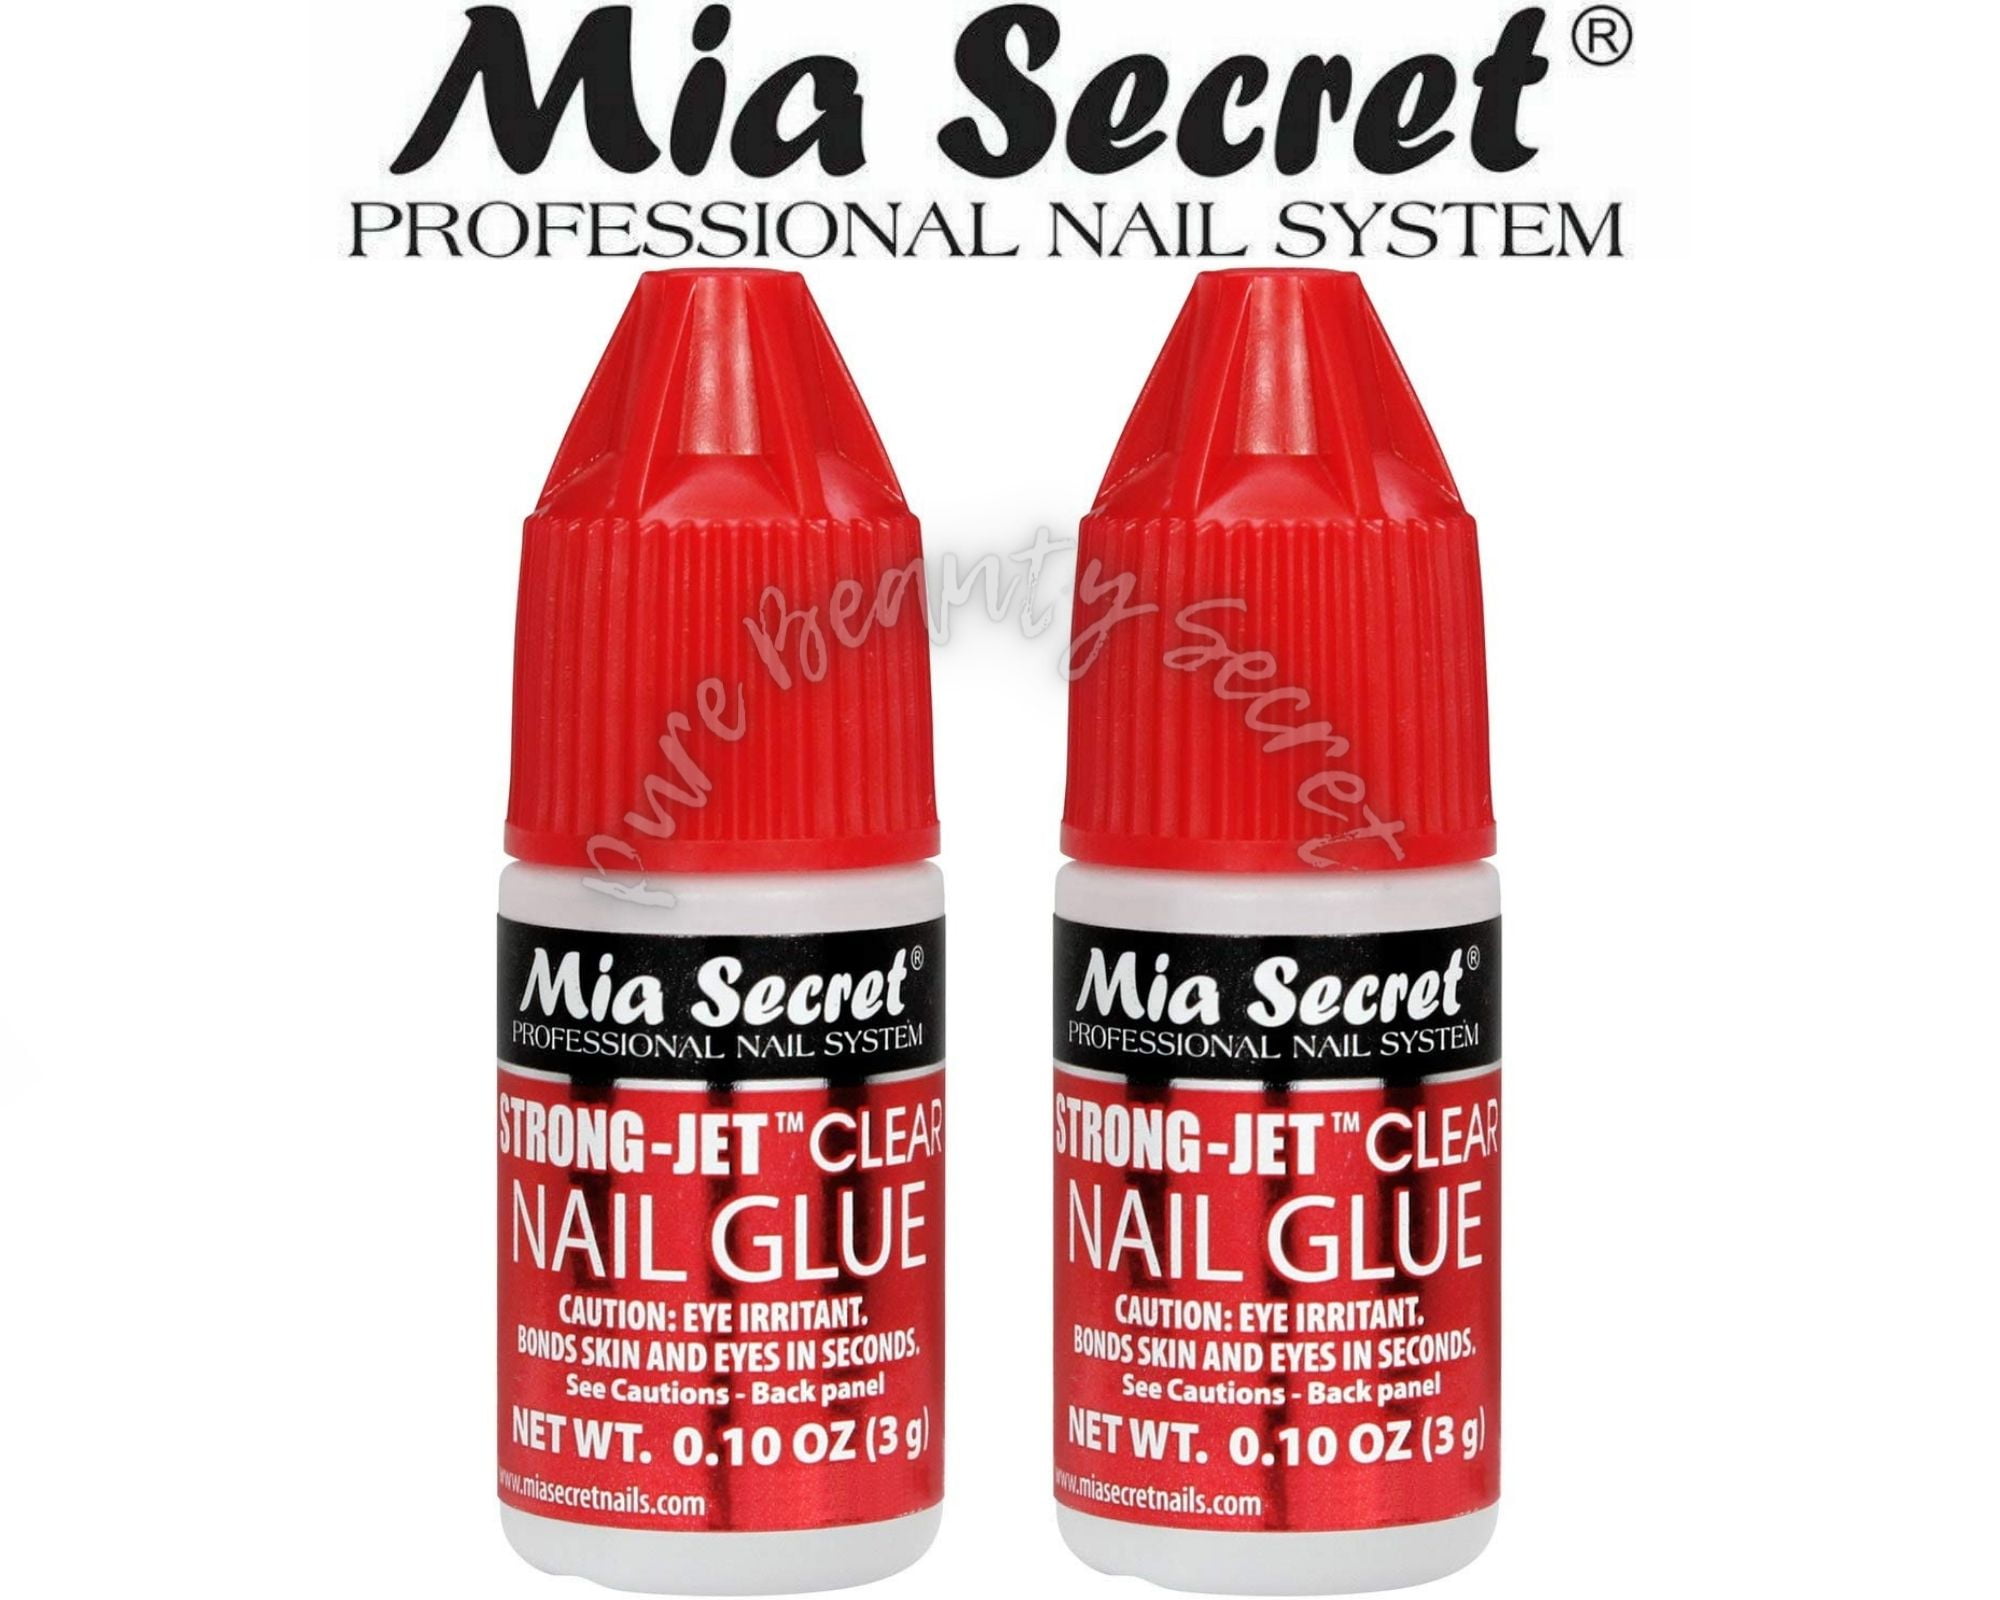 Mia Secret Strong-Jet Clear Nail Glue Drop-on Glue 3g (322) x 2 